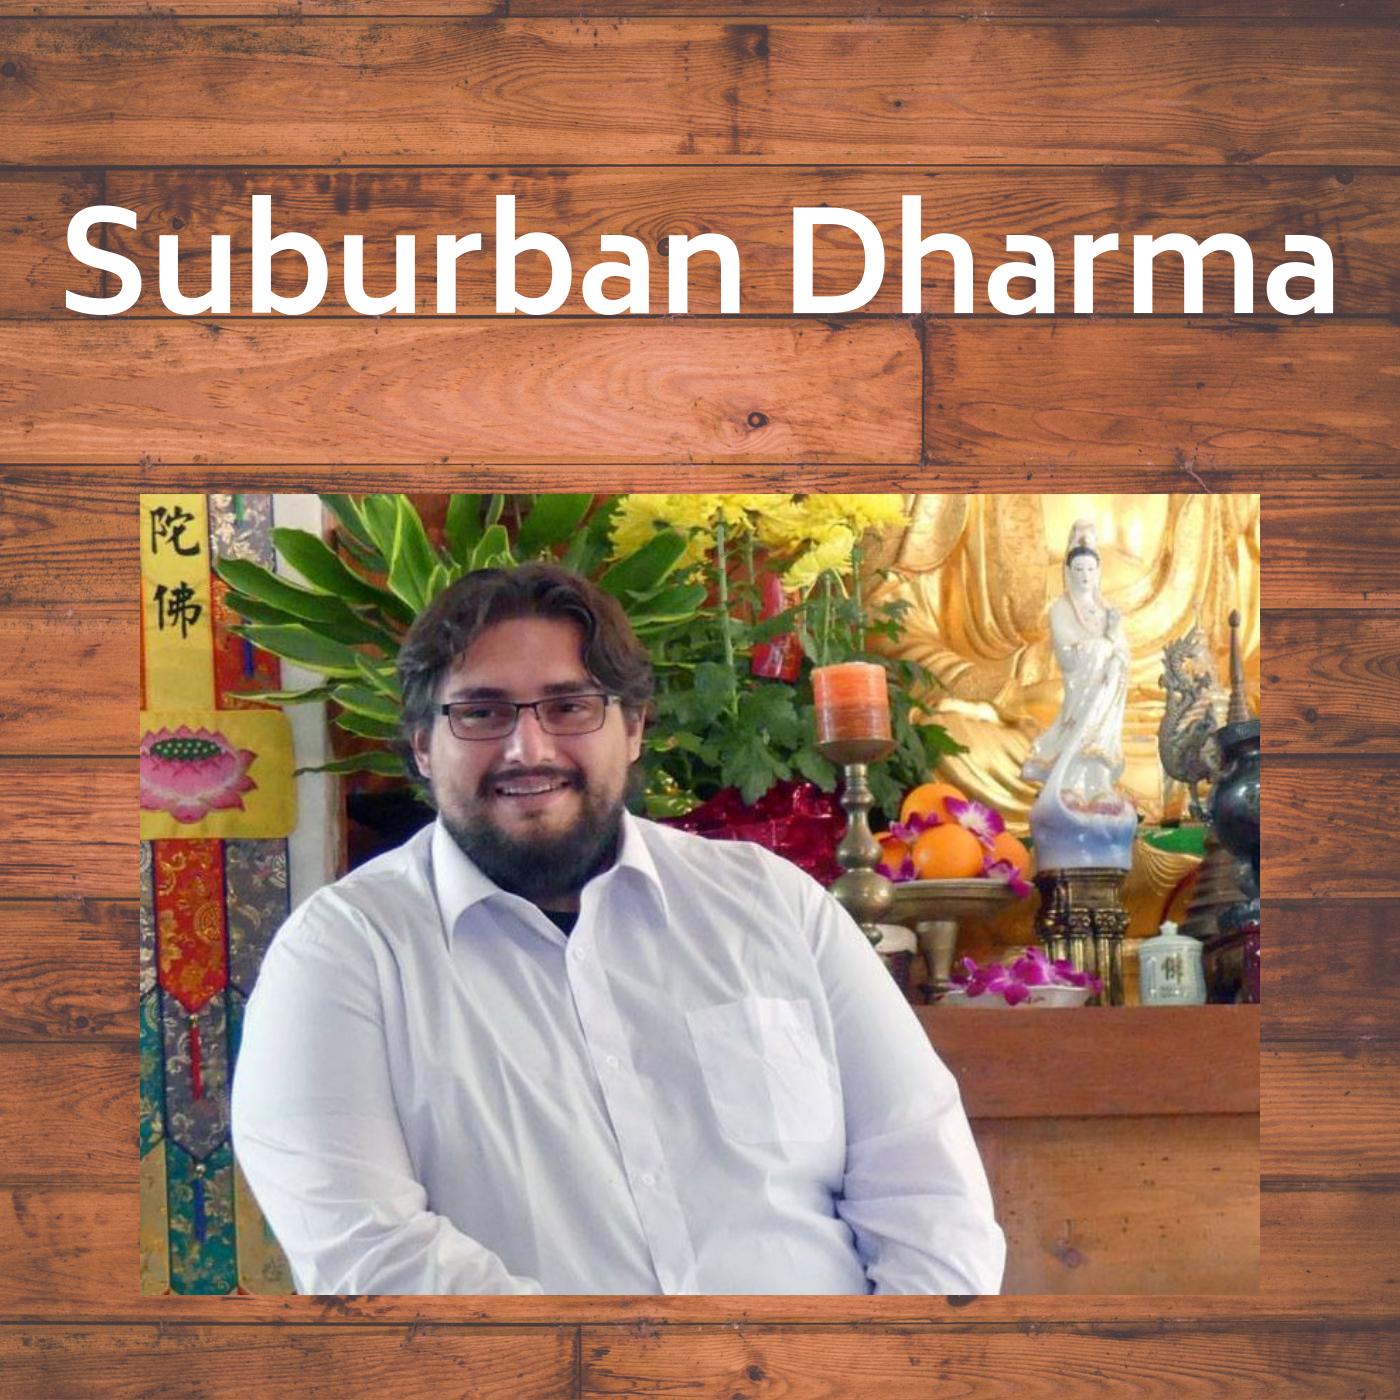 Suburban Dharma